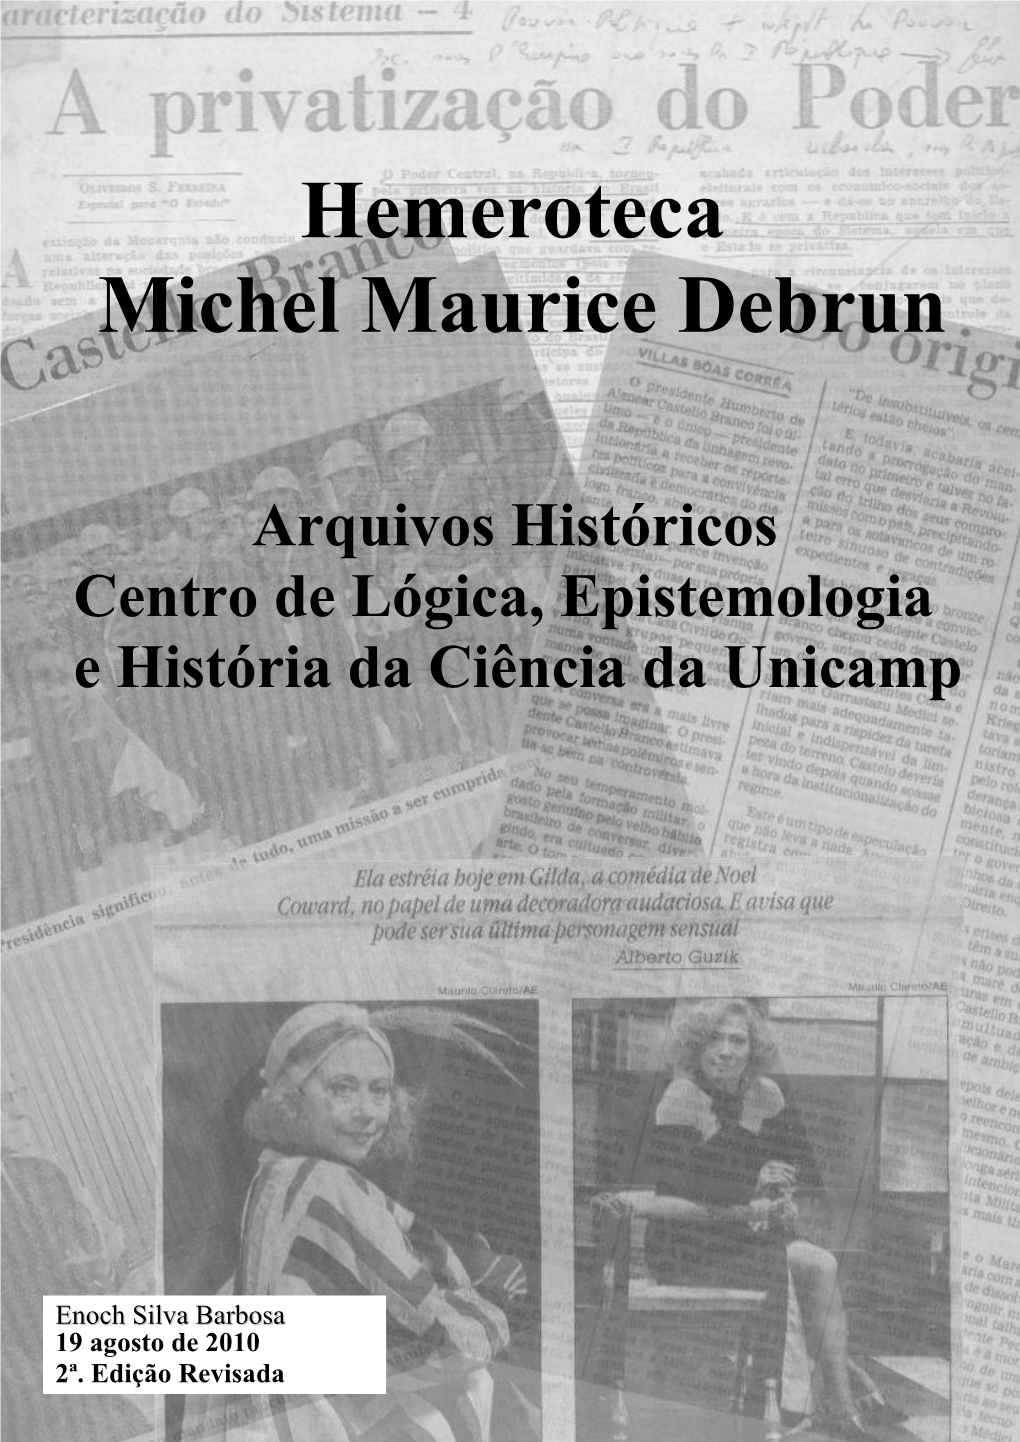 Hemeroteca Michel Maurice Debrun